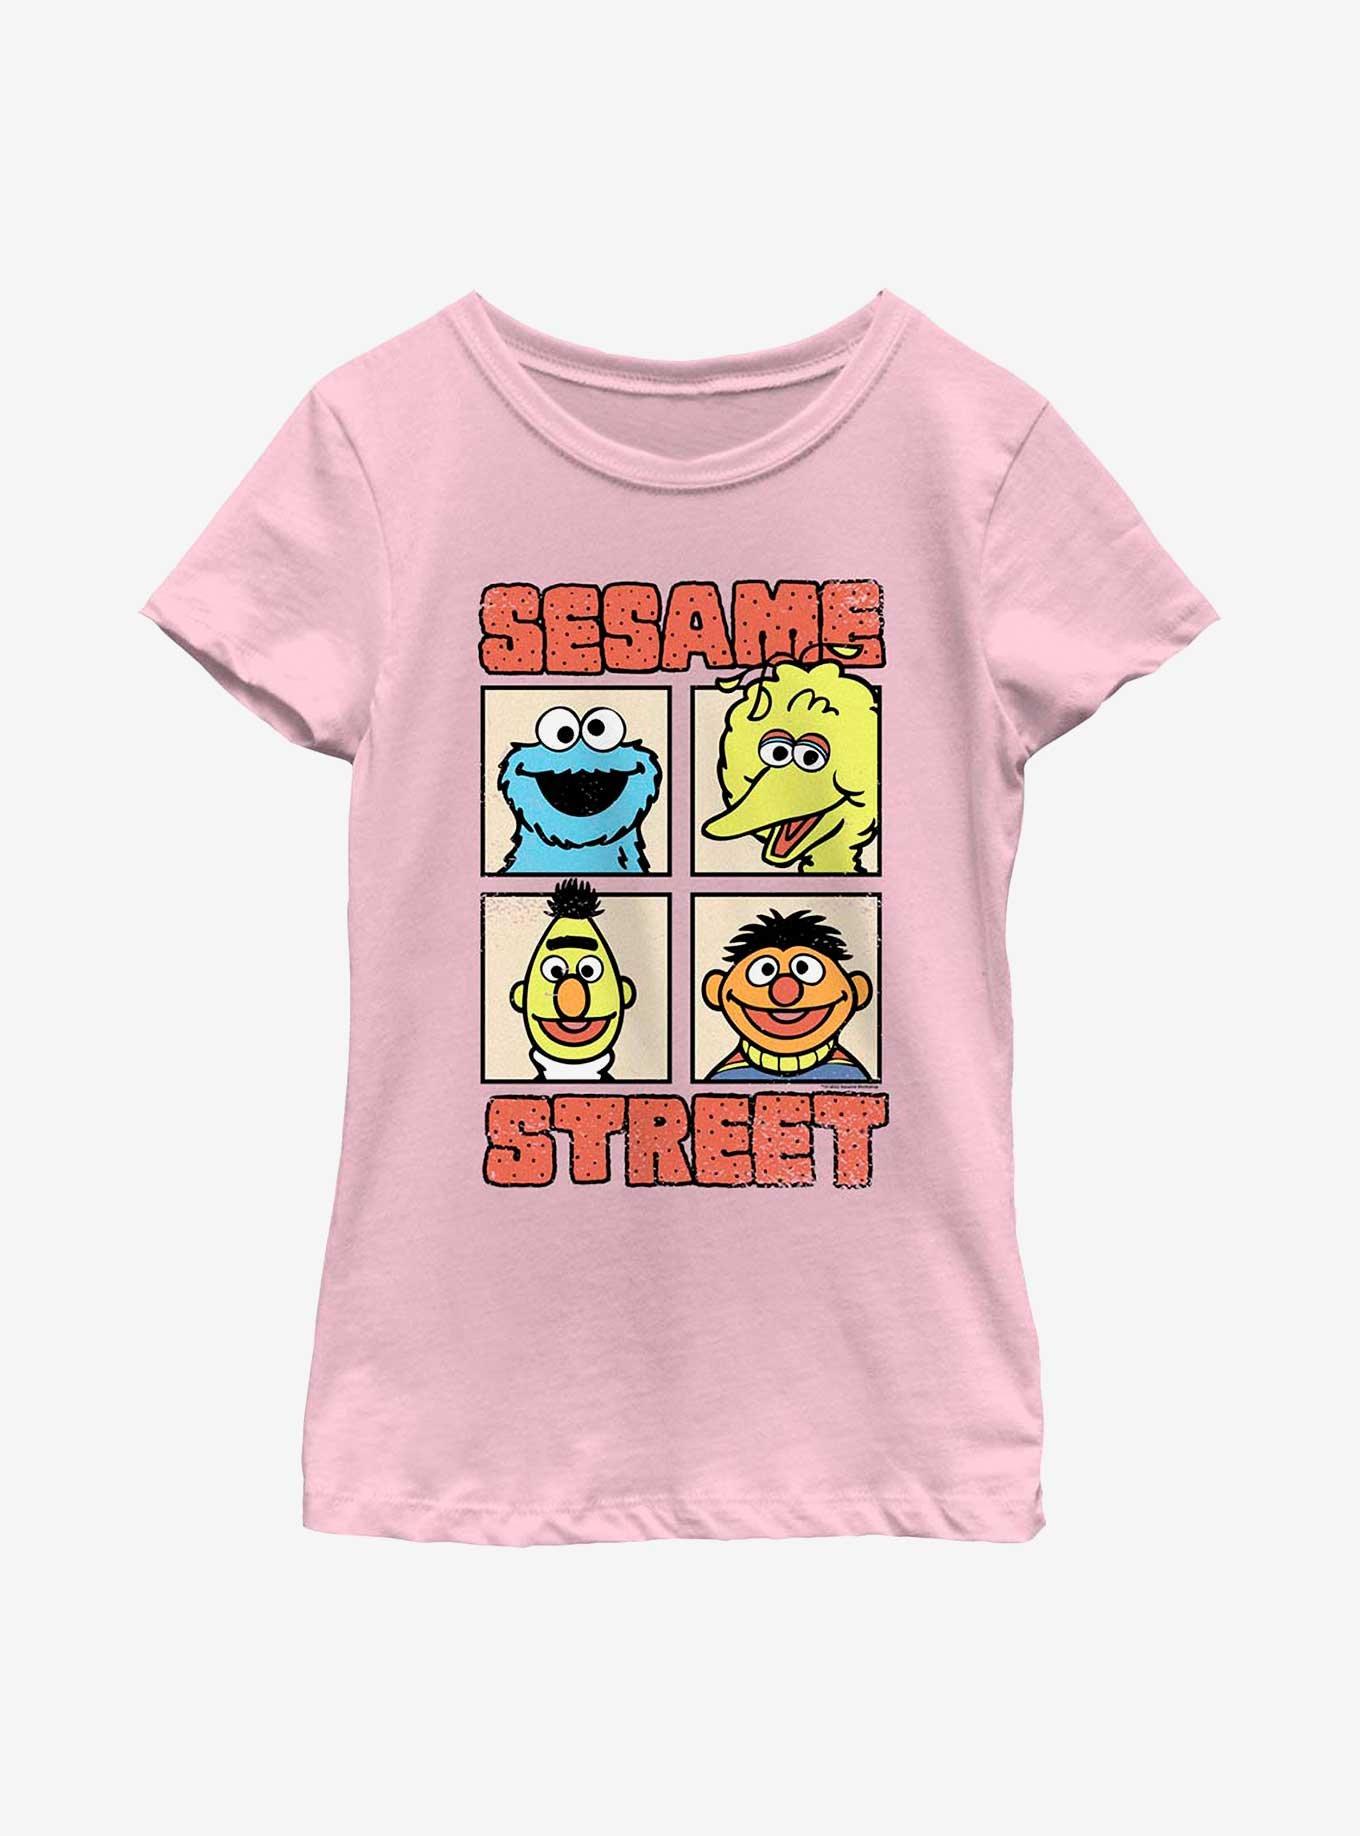 Sesame Street Bunch Youth Girls T-Shirt, PINK, hi-res